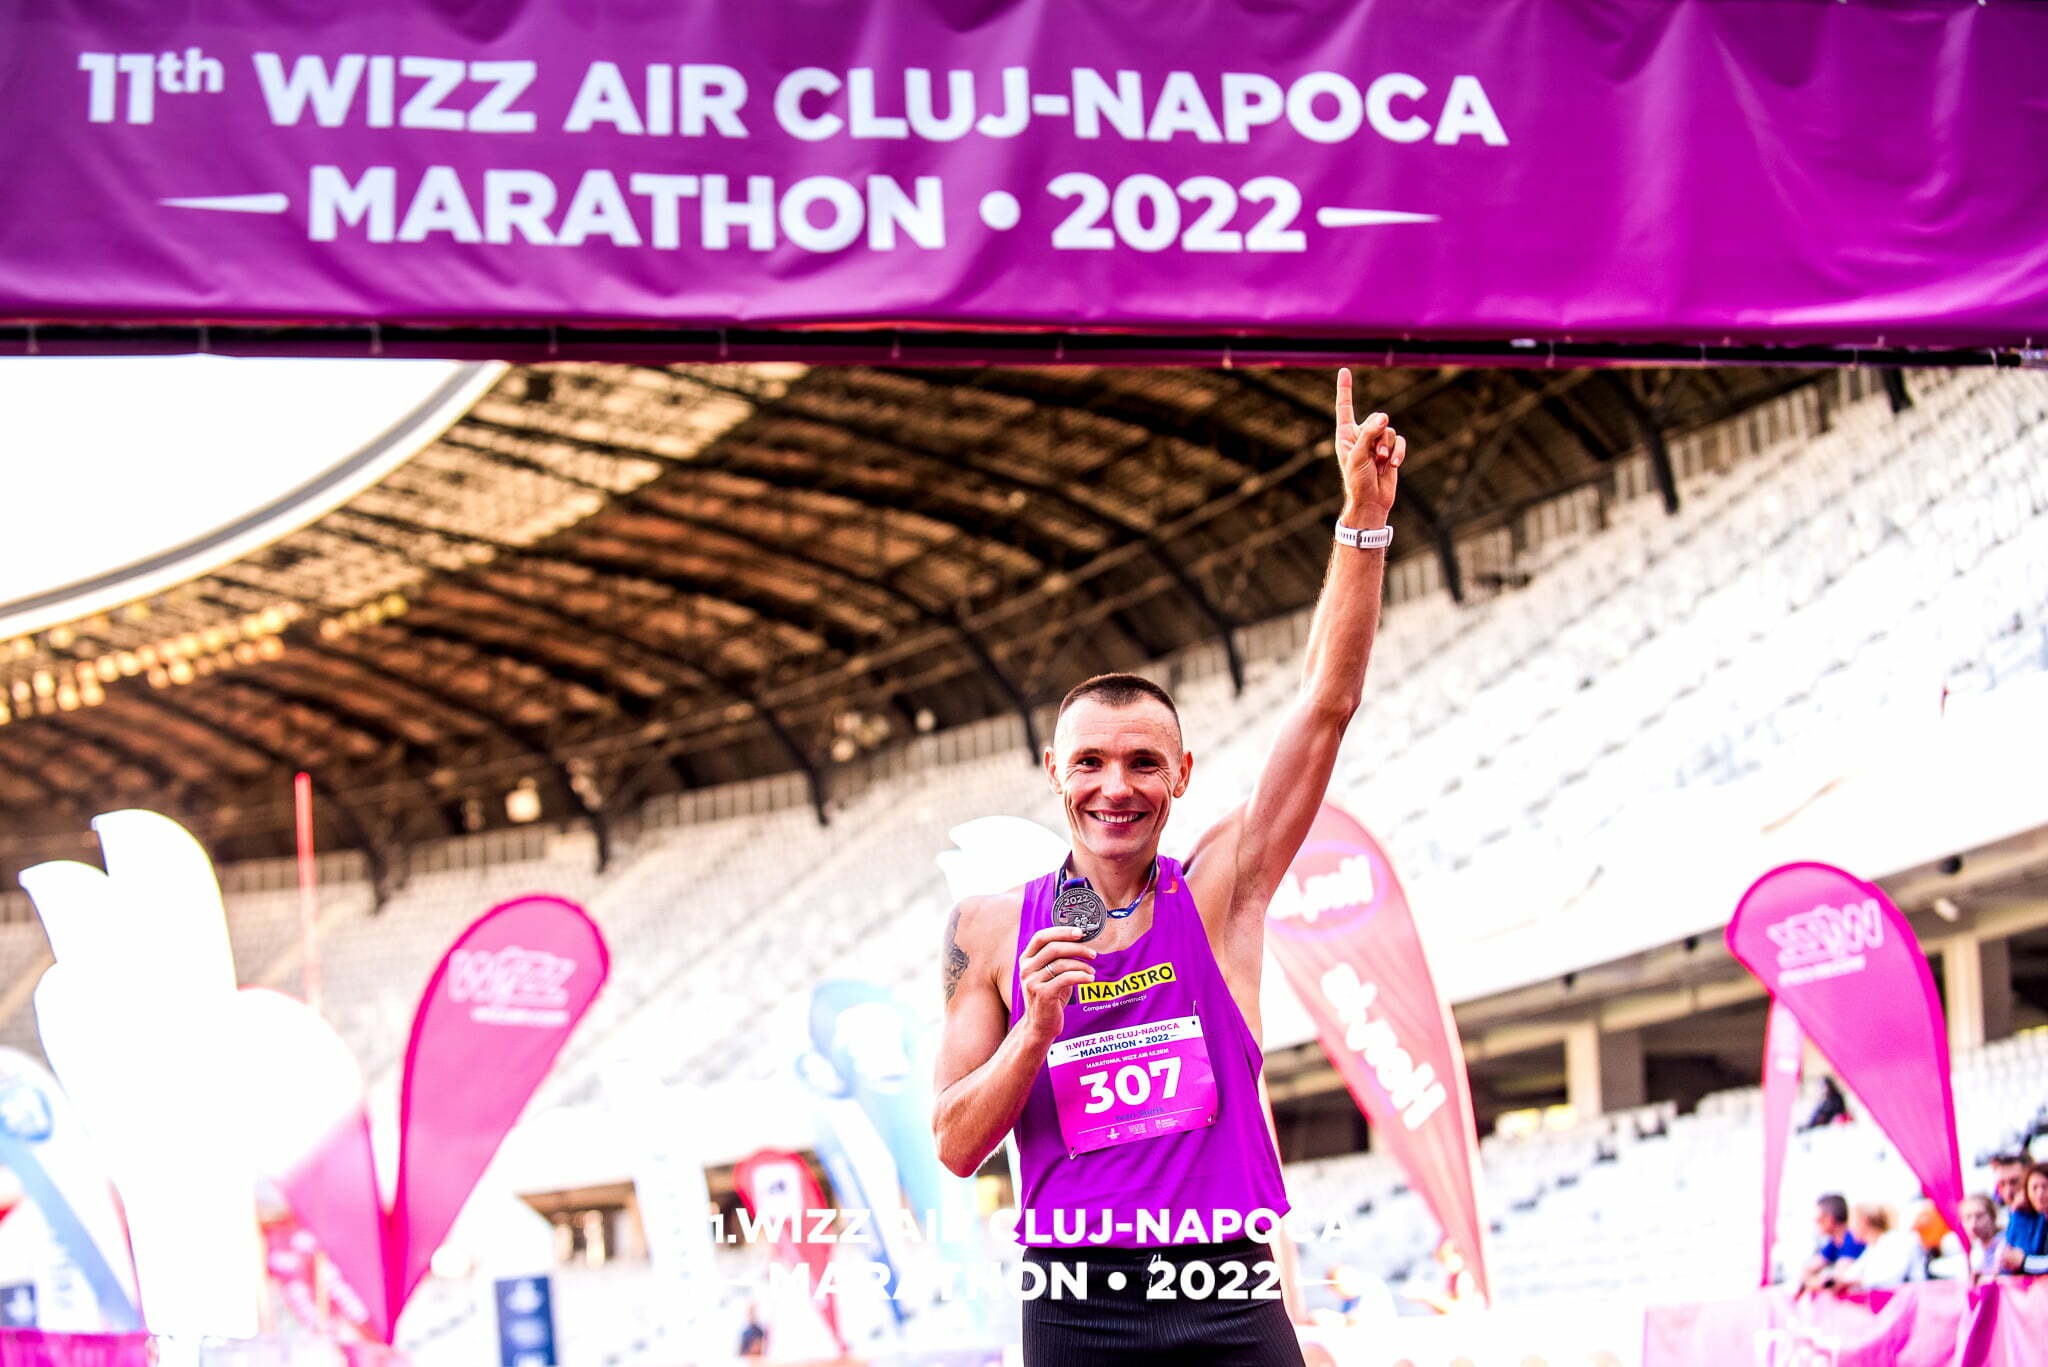 Două recorduri doborâte la probele de maraton și semimaraton de la Wizz Air Cluj-Napoca International Marathon 2022